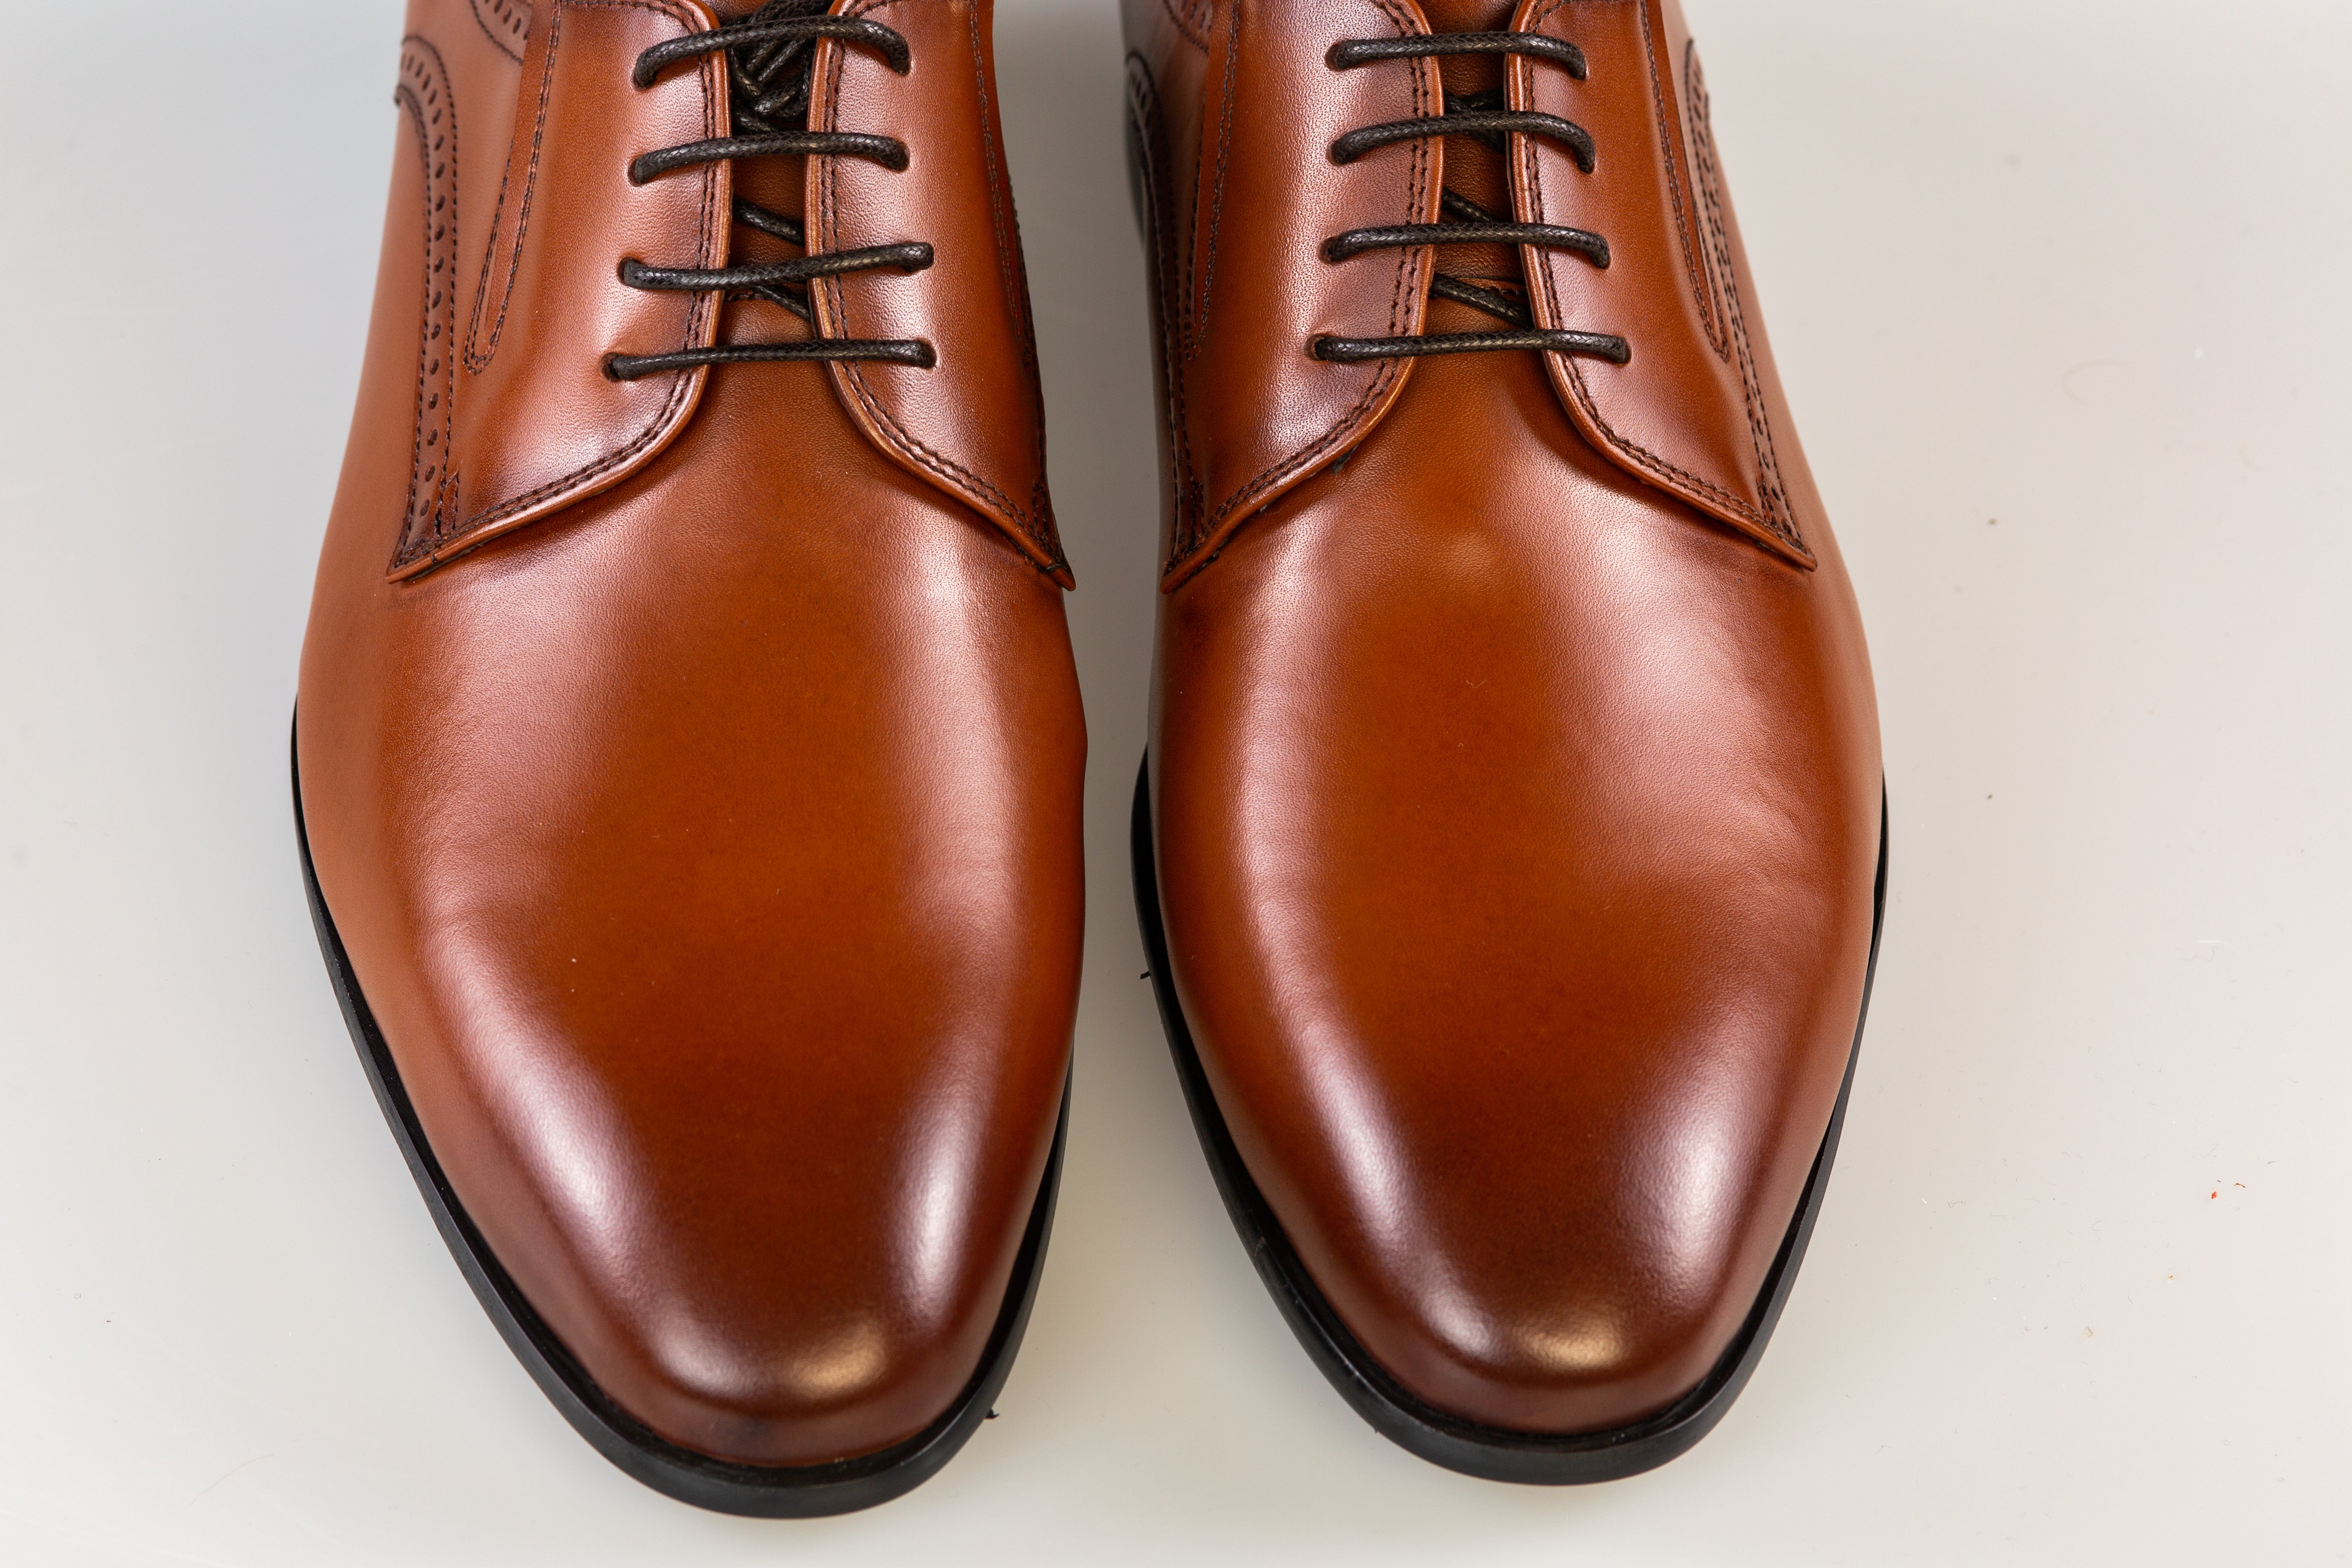 Pantofi barbati eleganti piele naturala 550-027 maro